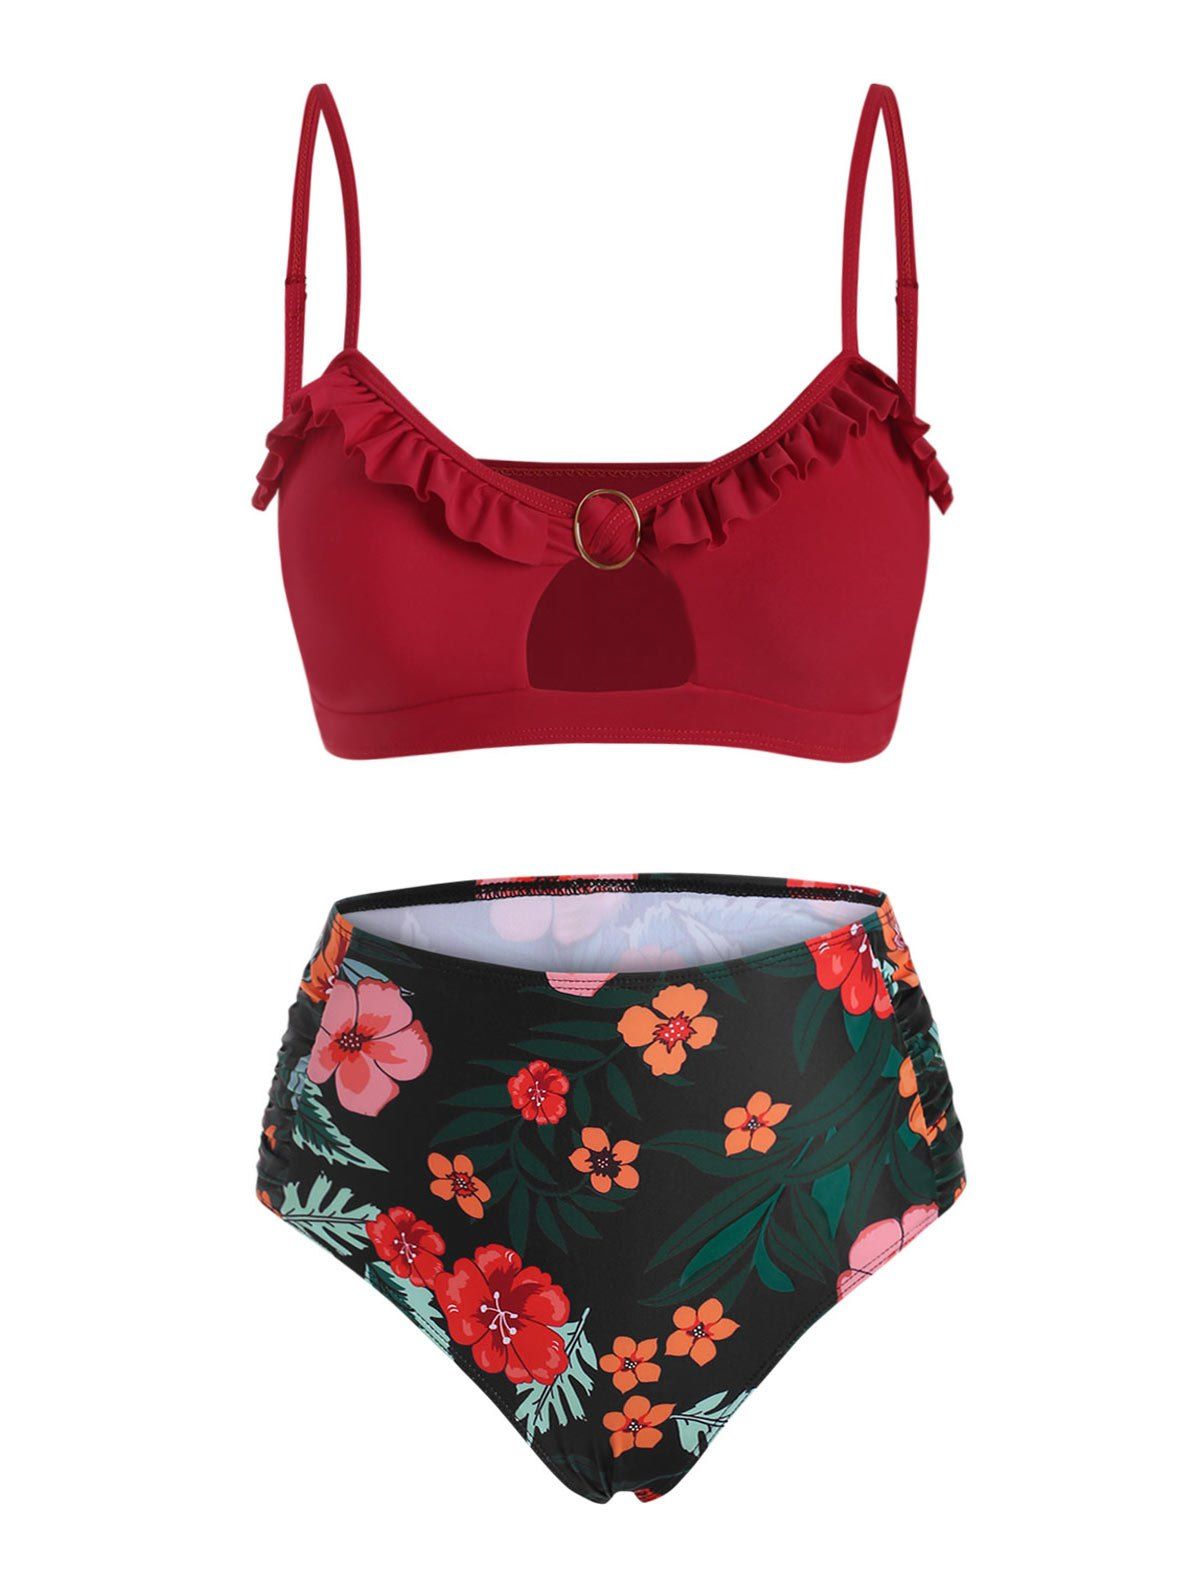 Floral Tummy Control Bikini Swimsuit Ruffle Cutout Swimwear Set - RED S